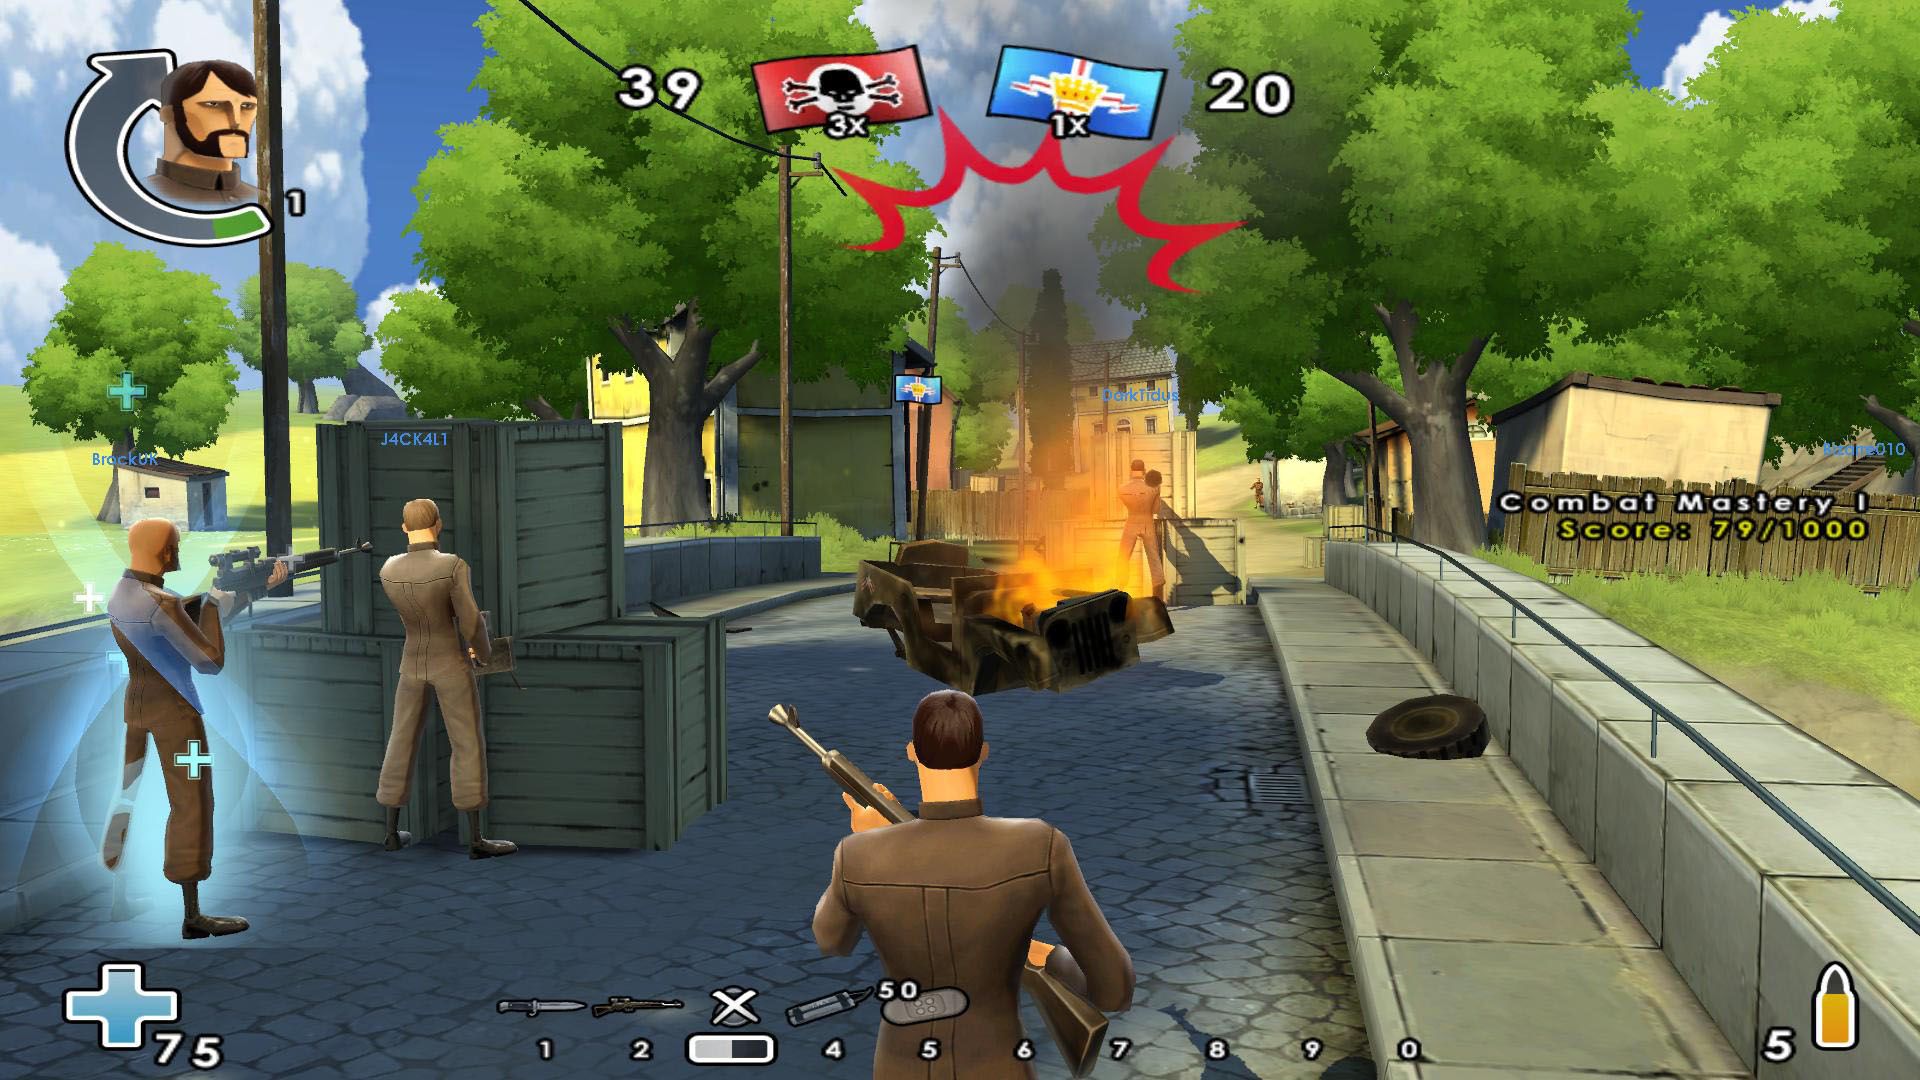 shooter-mmo-games-battlefield-heroes-screenshot.jpg